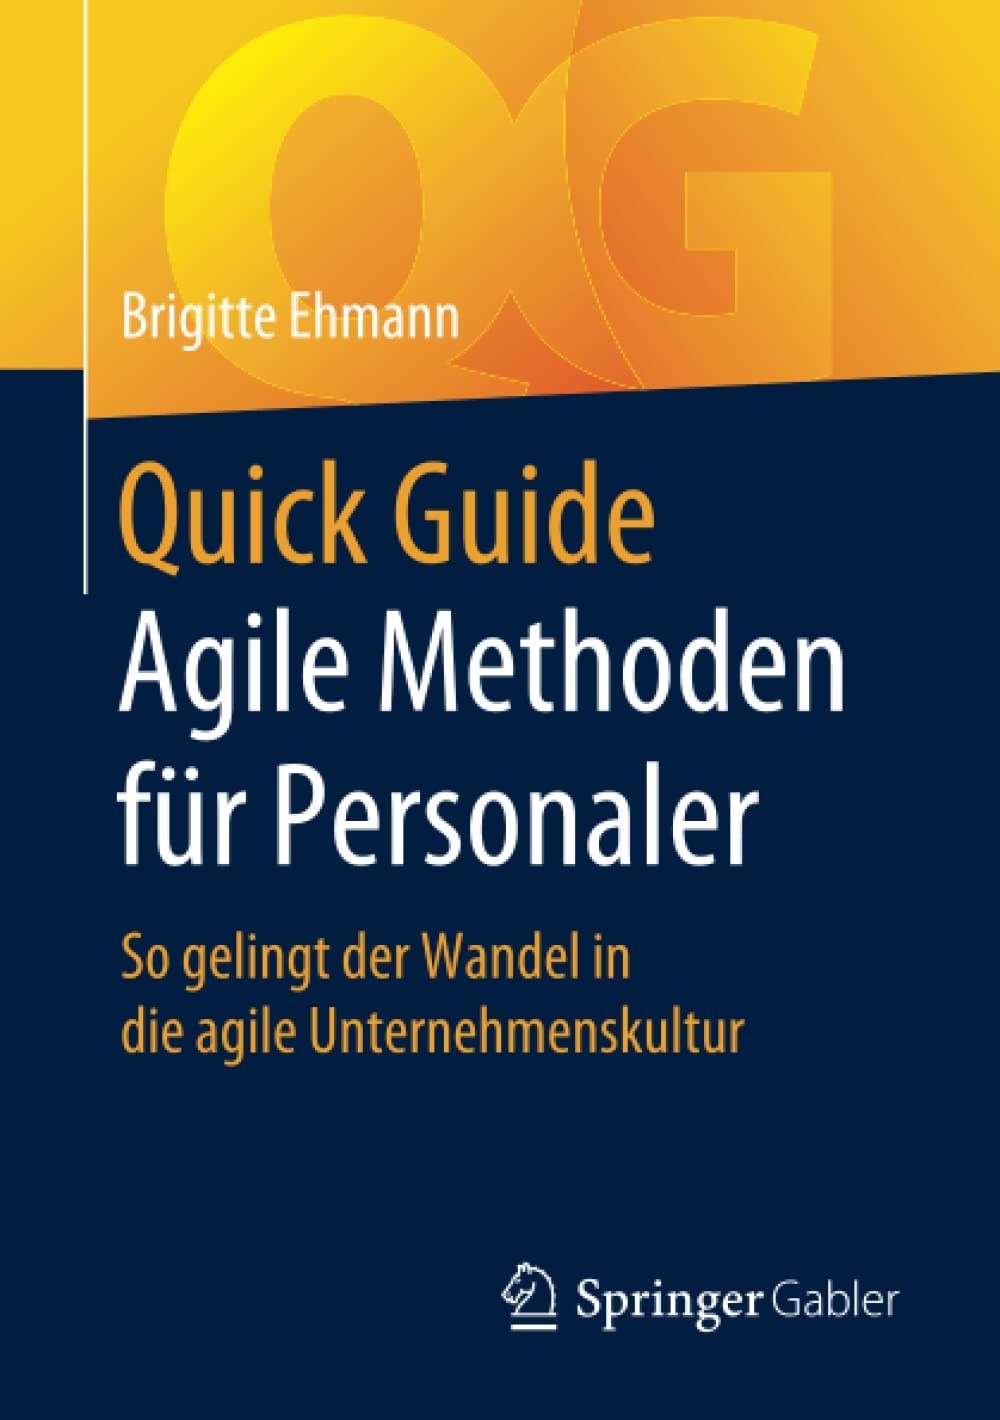 Quick Guide Agile Methoden für Personaler: So gelingt der Wandel in die agile Unternehmenskultur